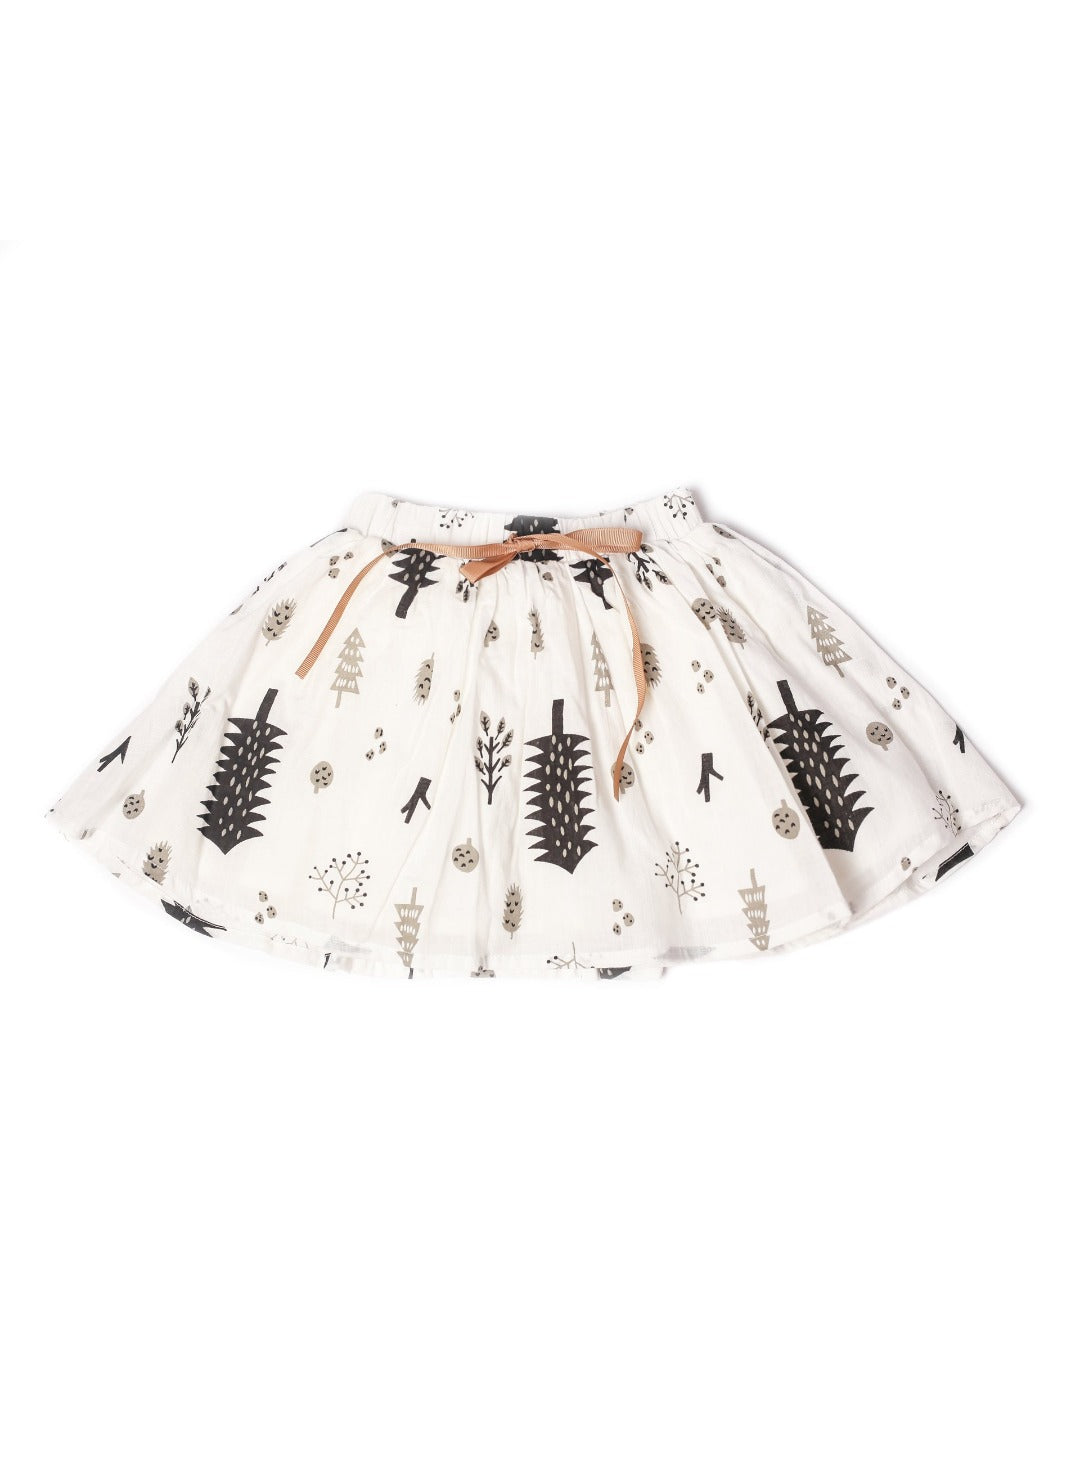 linen white skirt with pine trees print